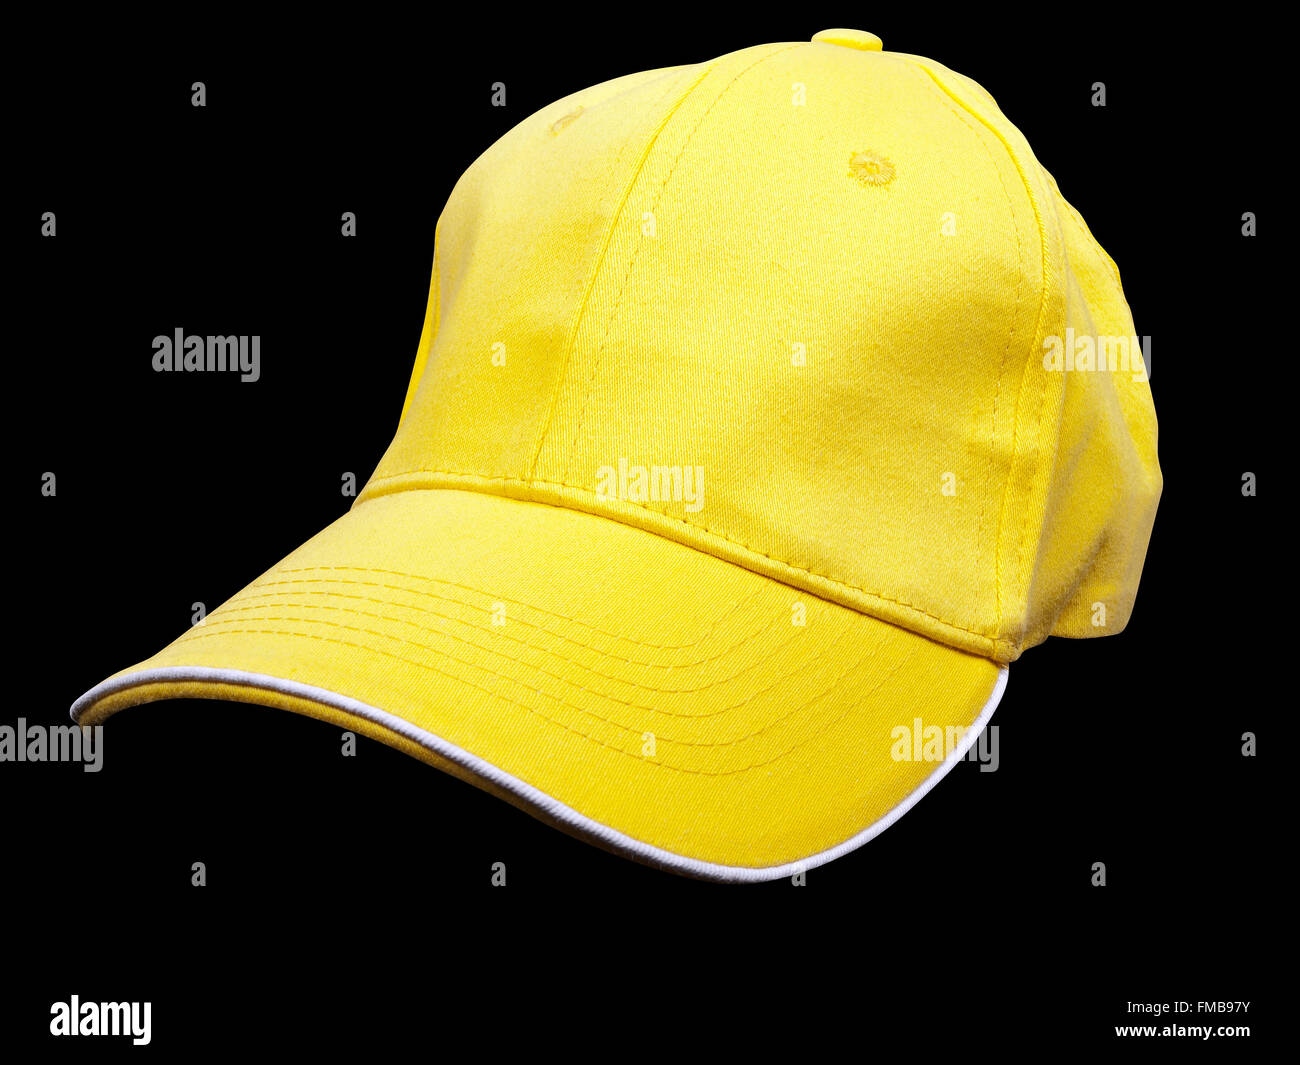 yellow baseball cap on black background, studio shot Stock Photo